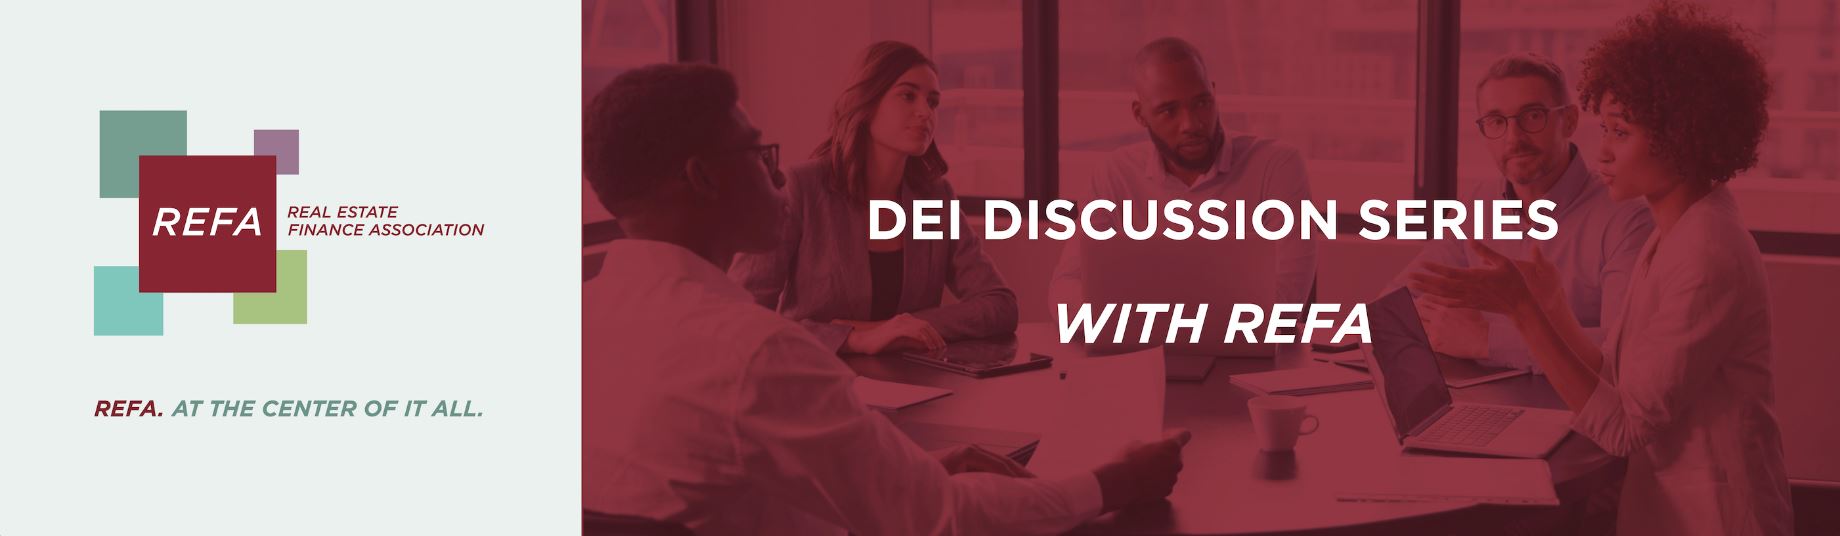 REFA DEI Discussion Series - The Conversation